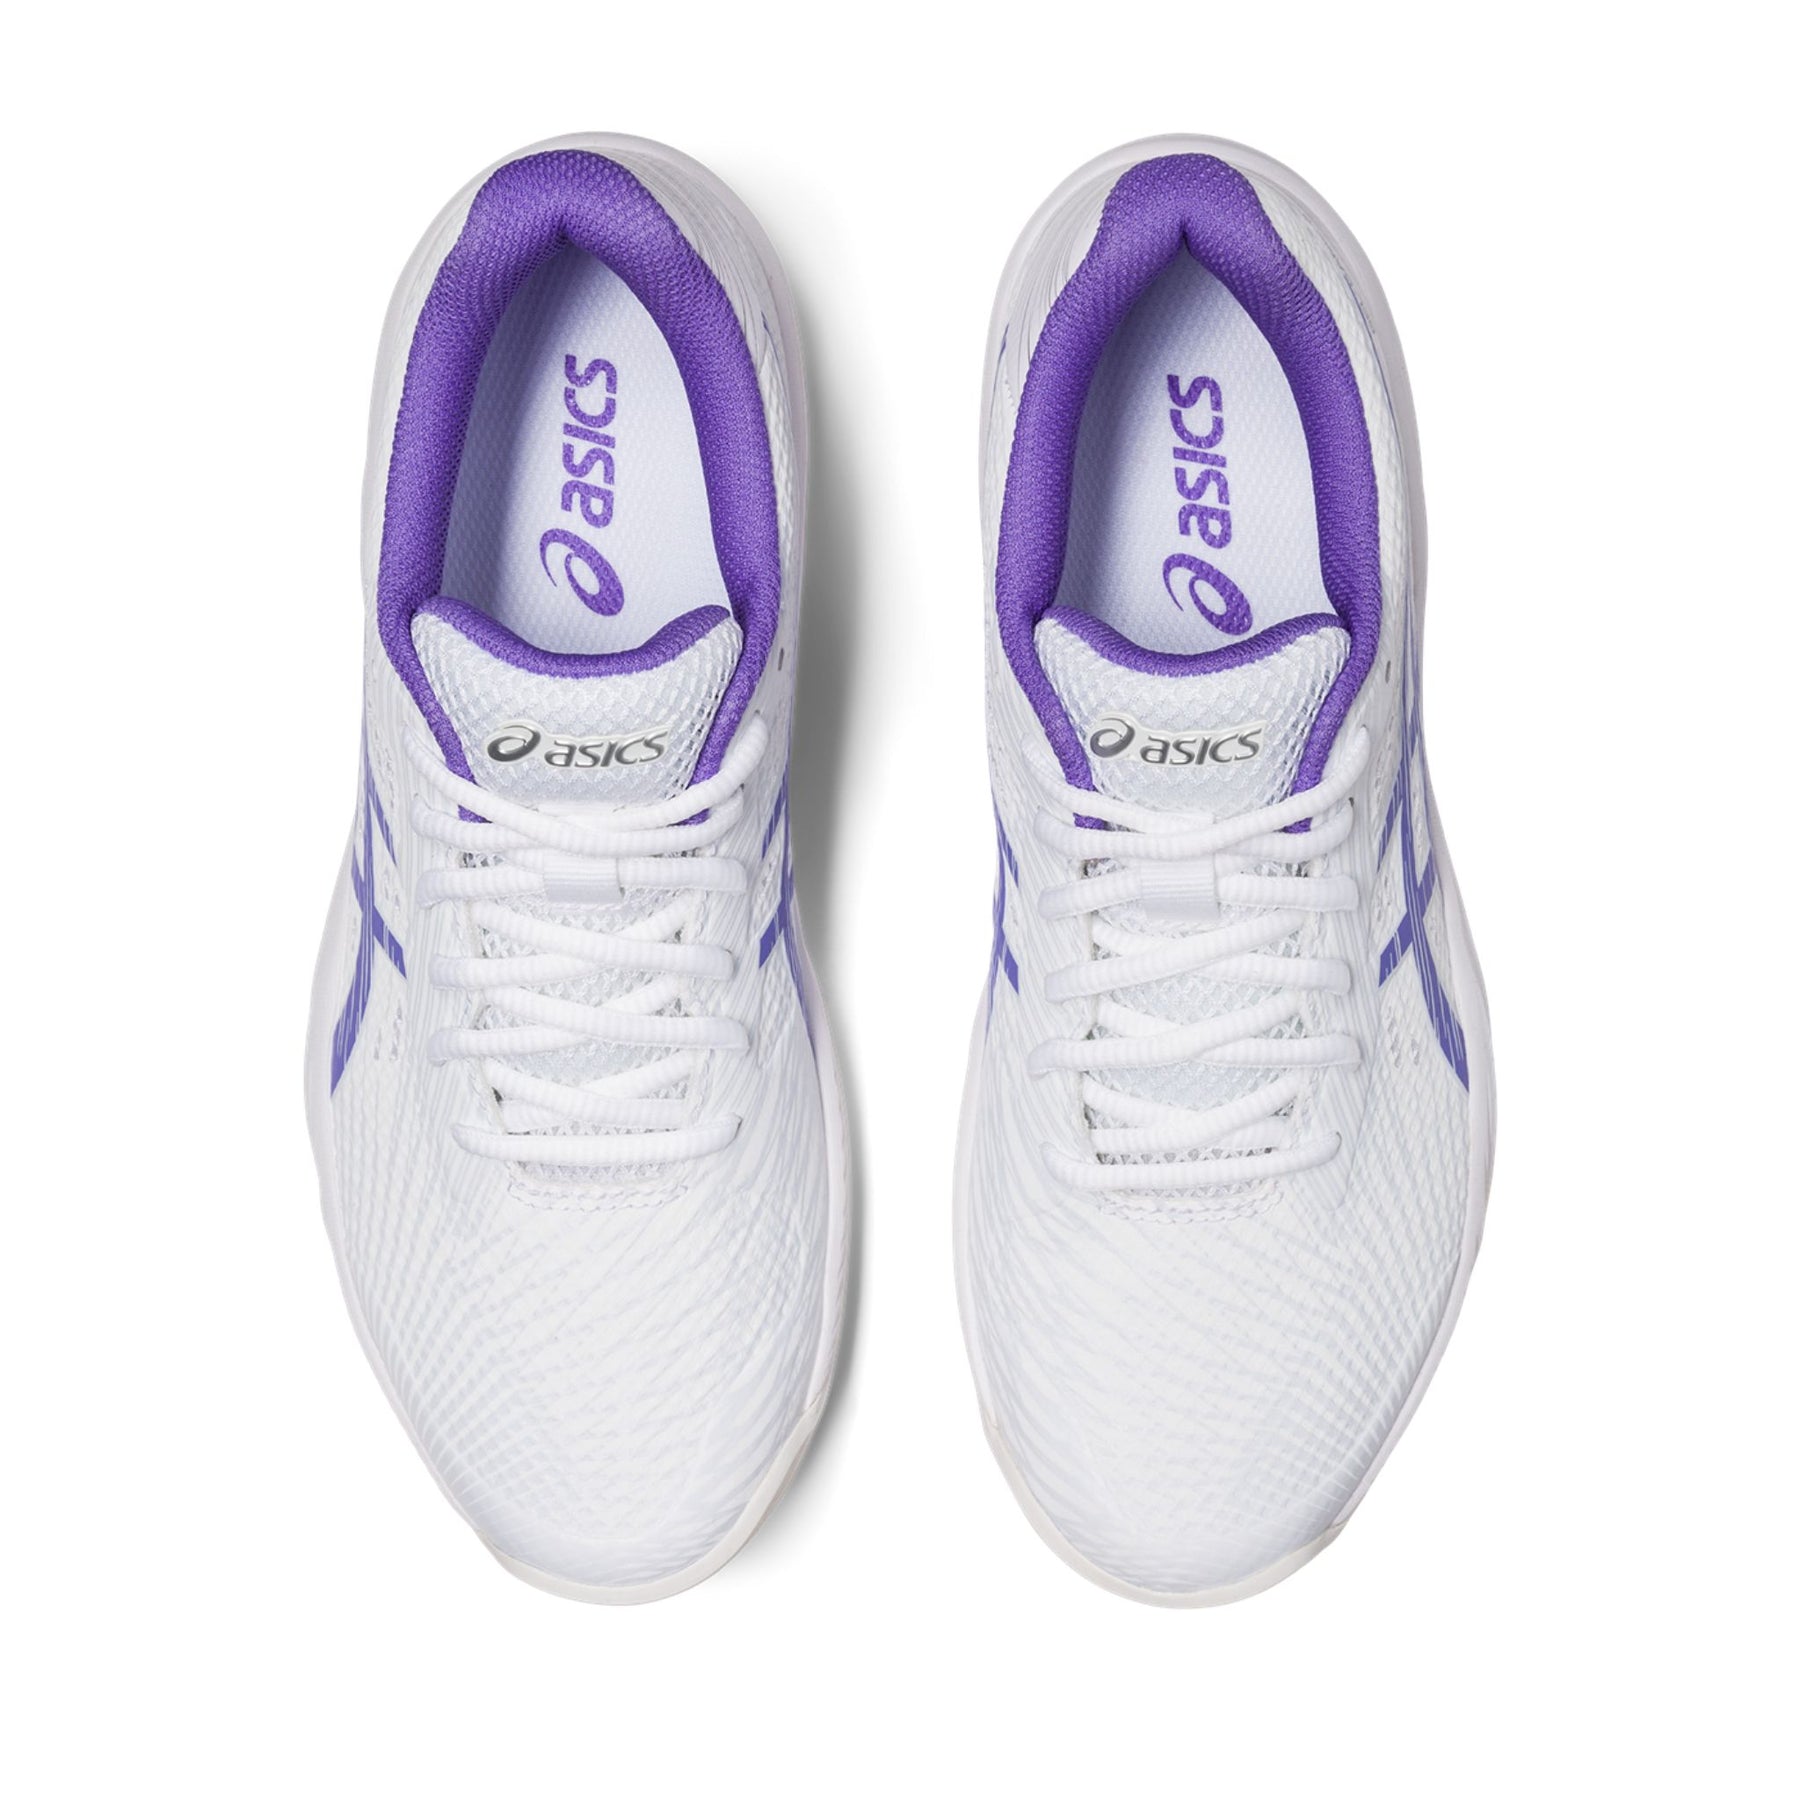 Asics Gel Game 9 Womens Tennis Shoes: White/Amethyst